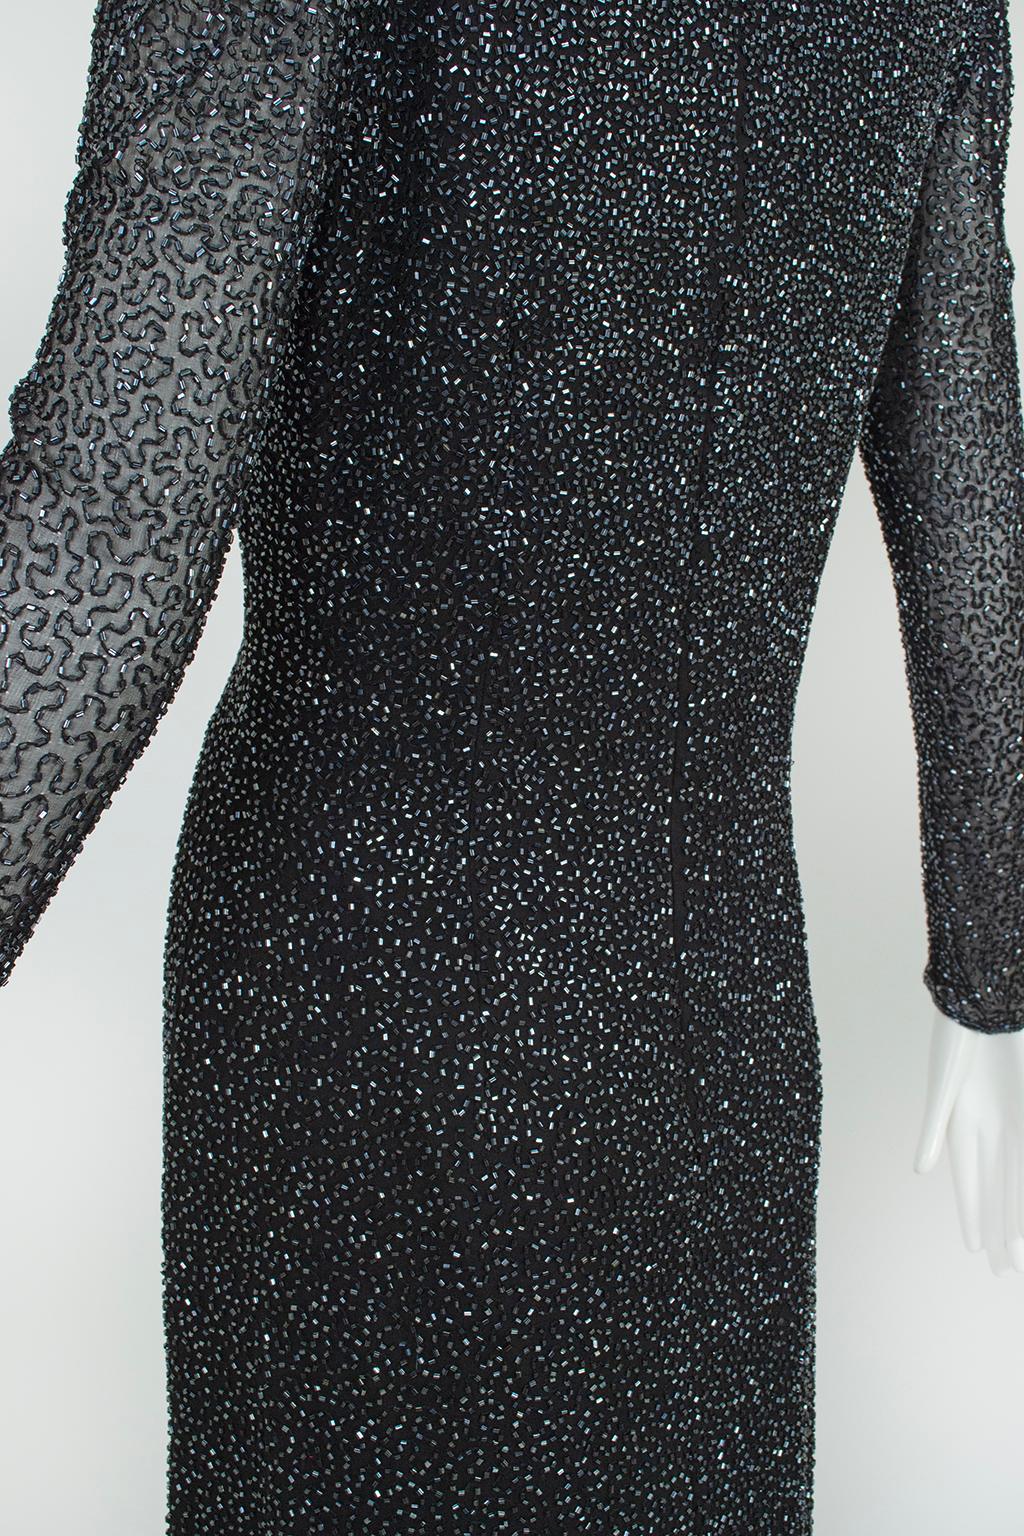 Lillie Rubin Black Full Length Beaded Column Gown w Illusion Sleeves – L, 21st C For Sale 4